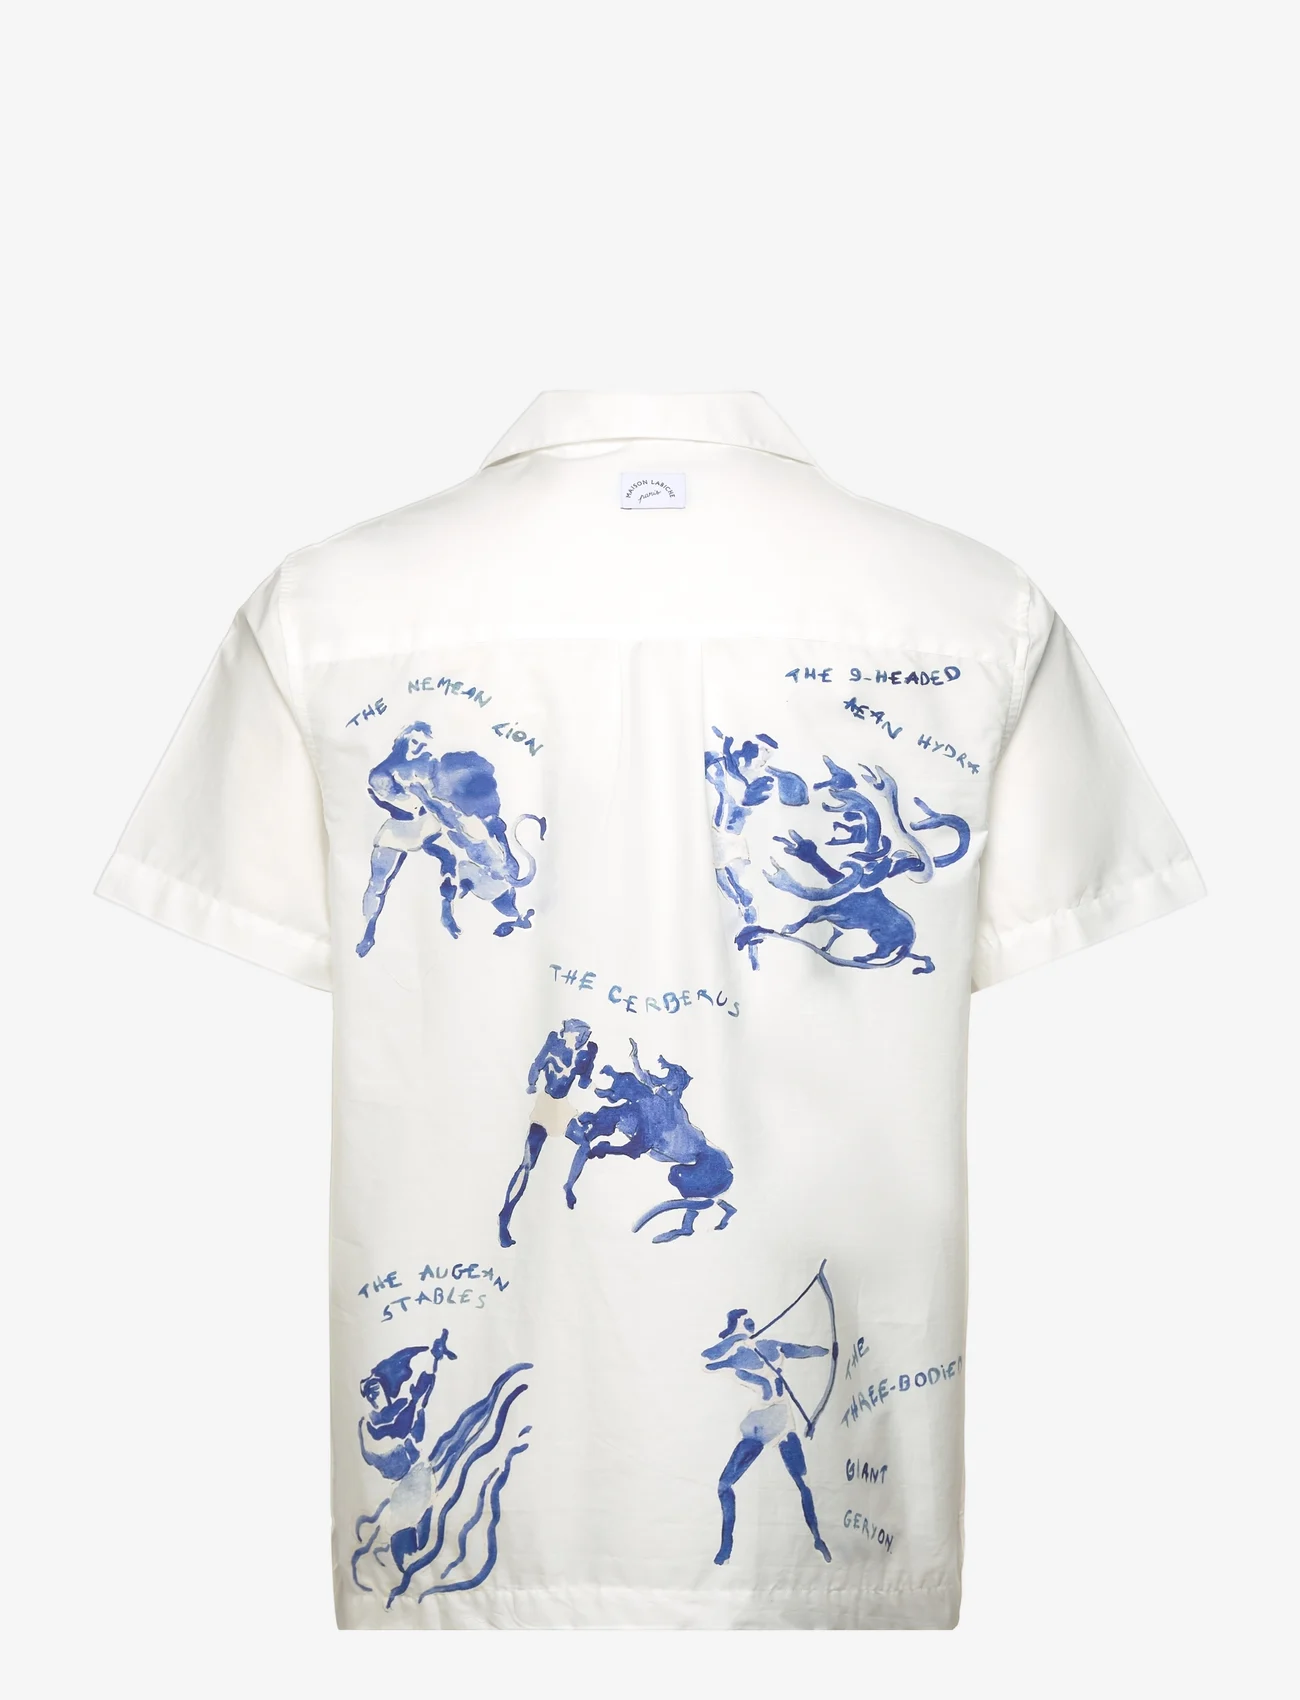 Maison Labiche Paris - MORNEY NB - basic overhemden - heracles print - 1